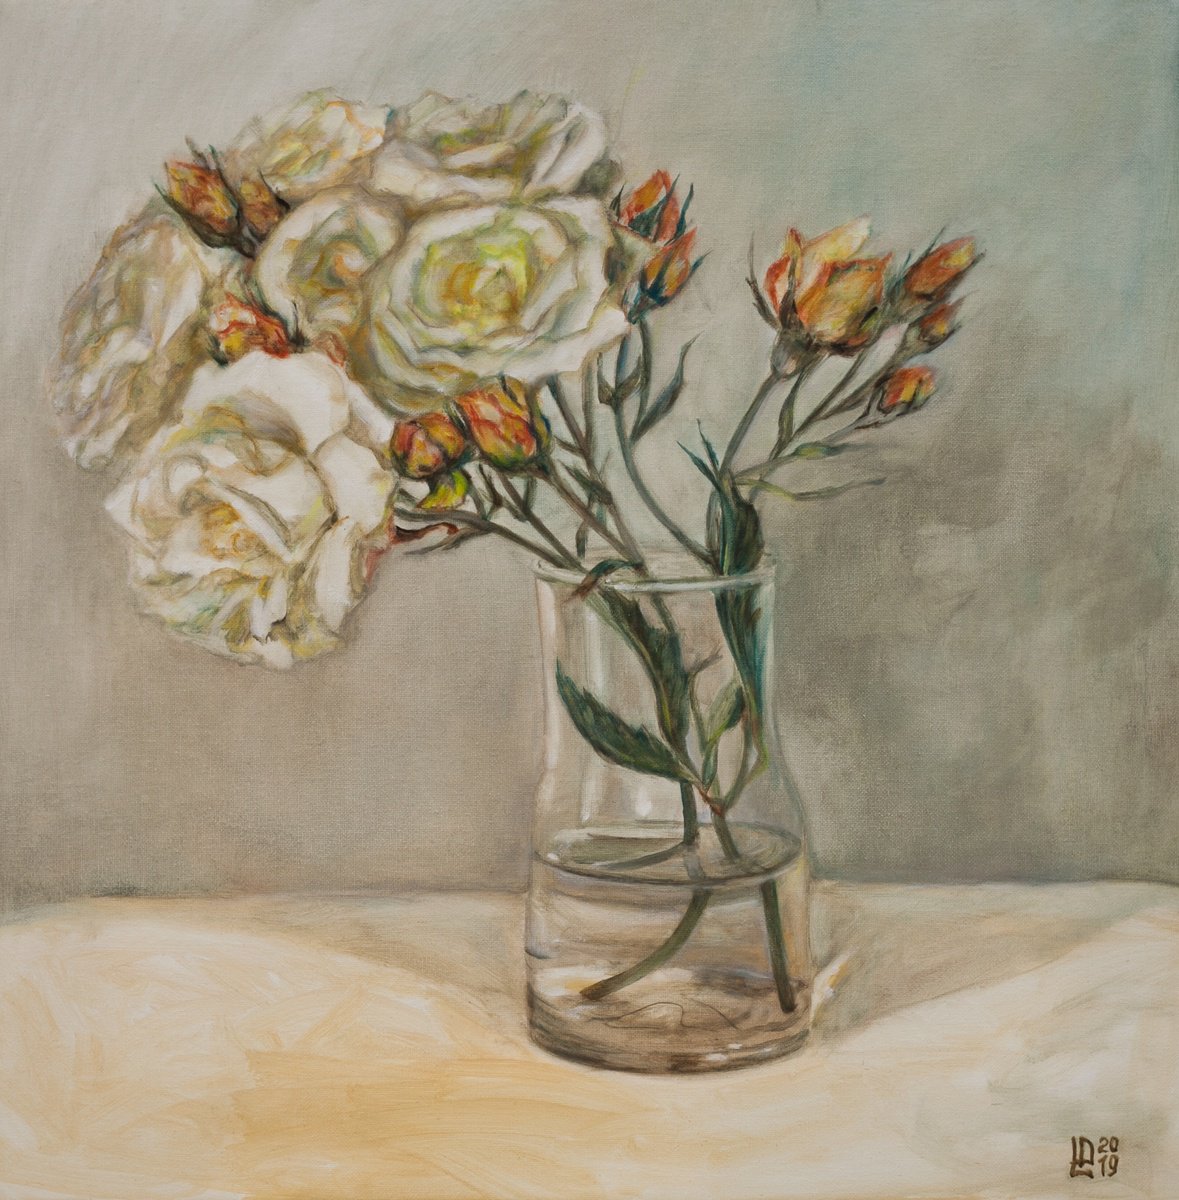 Garden Roses In A Glass Vase by Liudmila Pisliakova